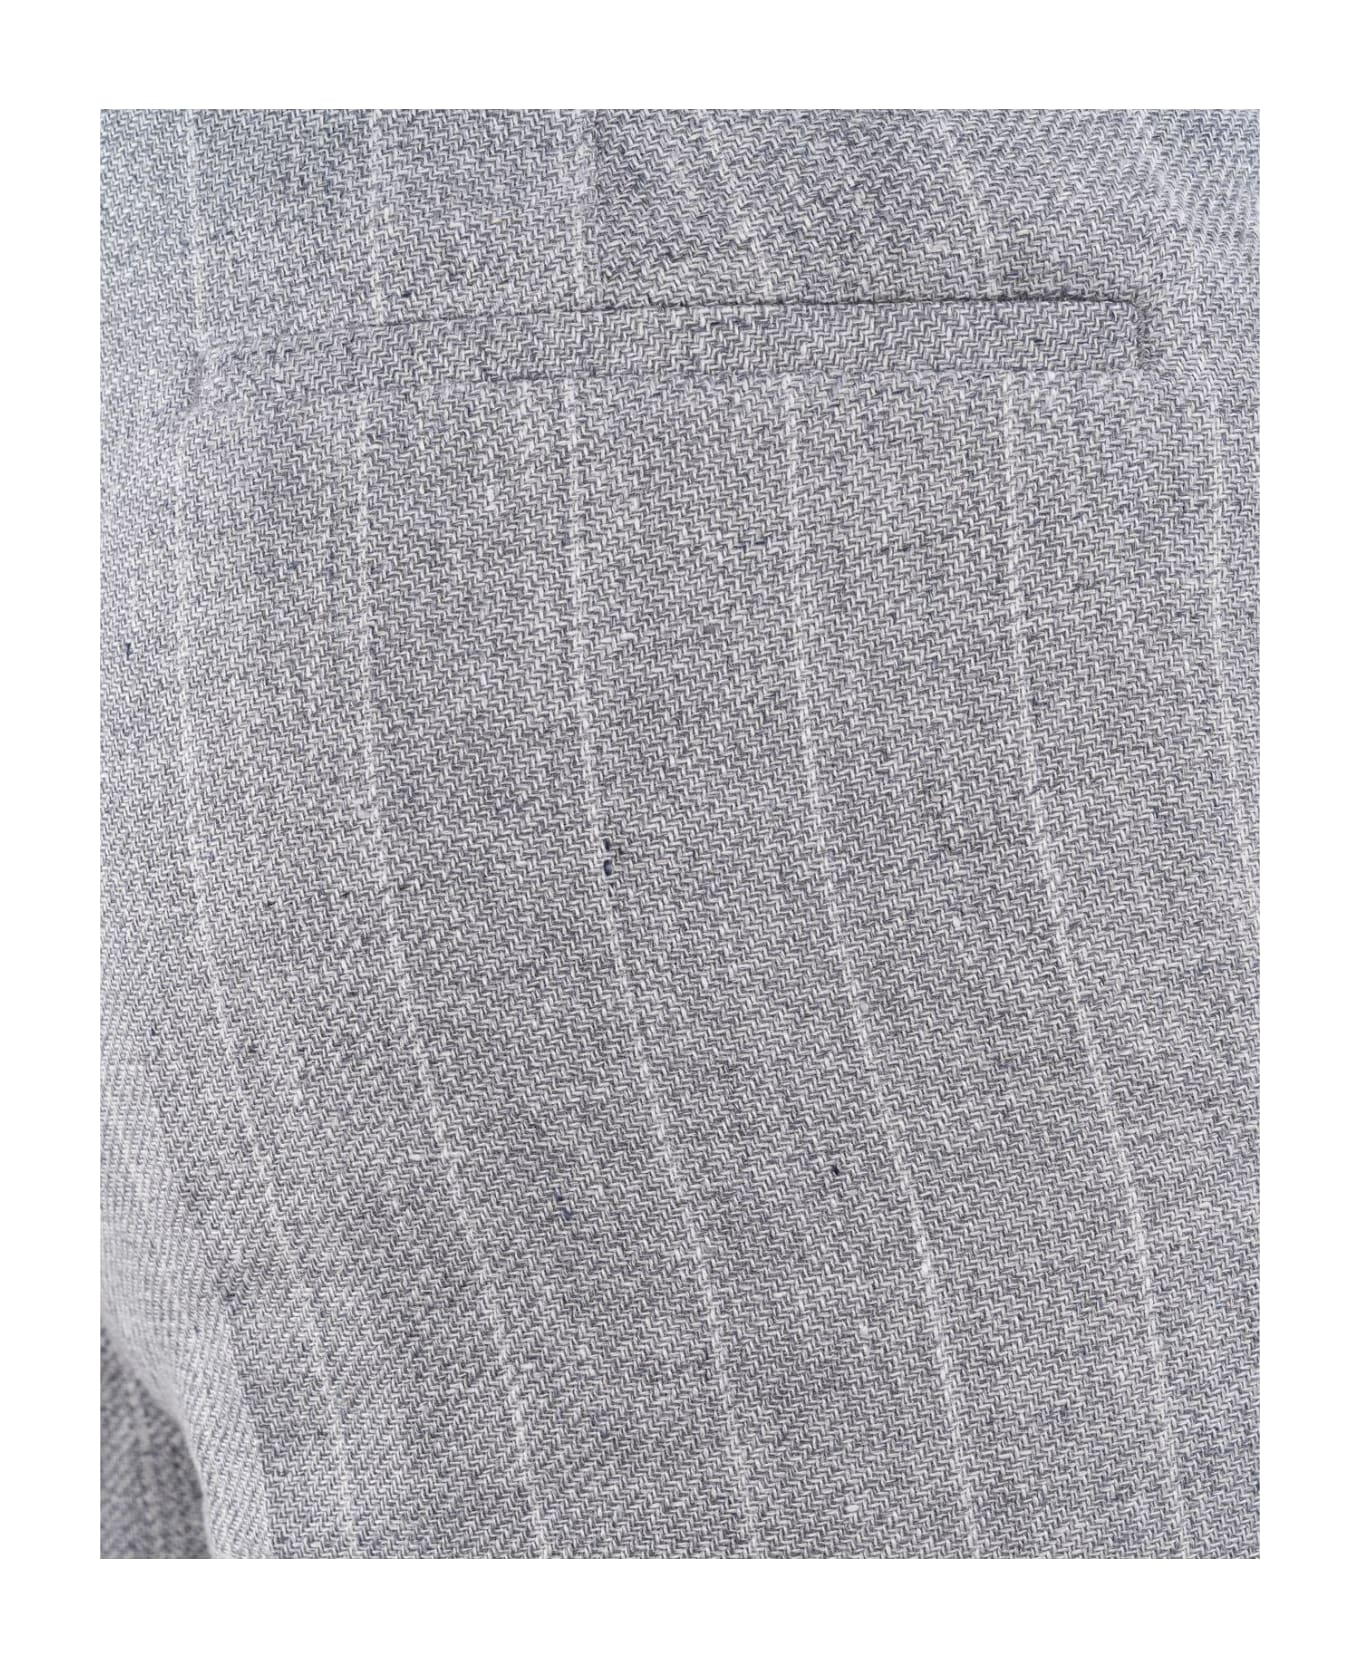 Brunello Cucinelli Pinstripe Tailored Trousers - Grey